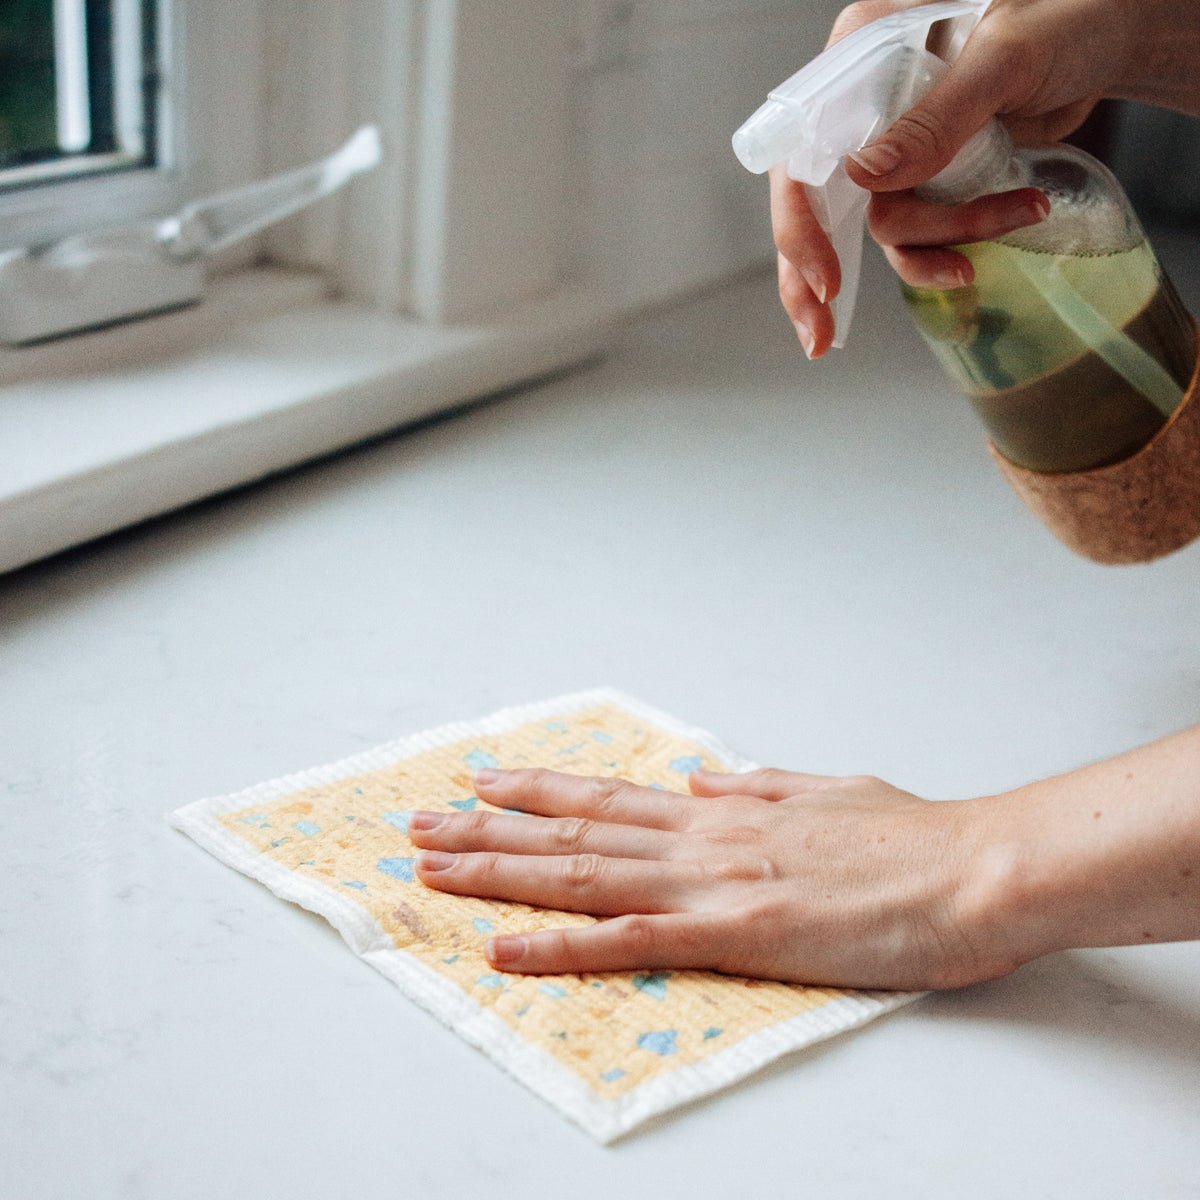 10 Ways We Use Swedish Dishcloths — The Purposeful You · Garden +  Sustainable Living